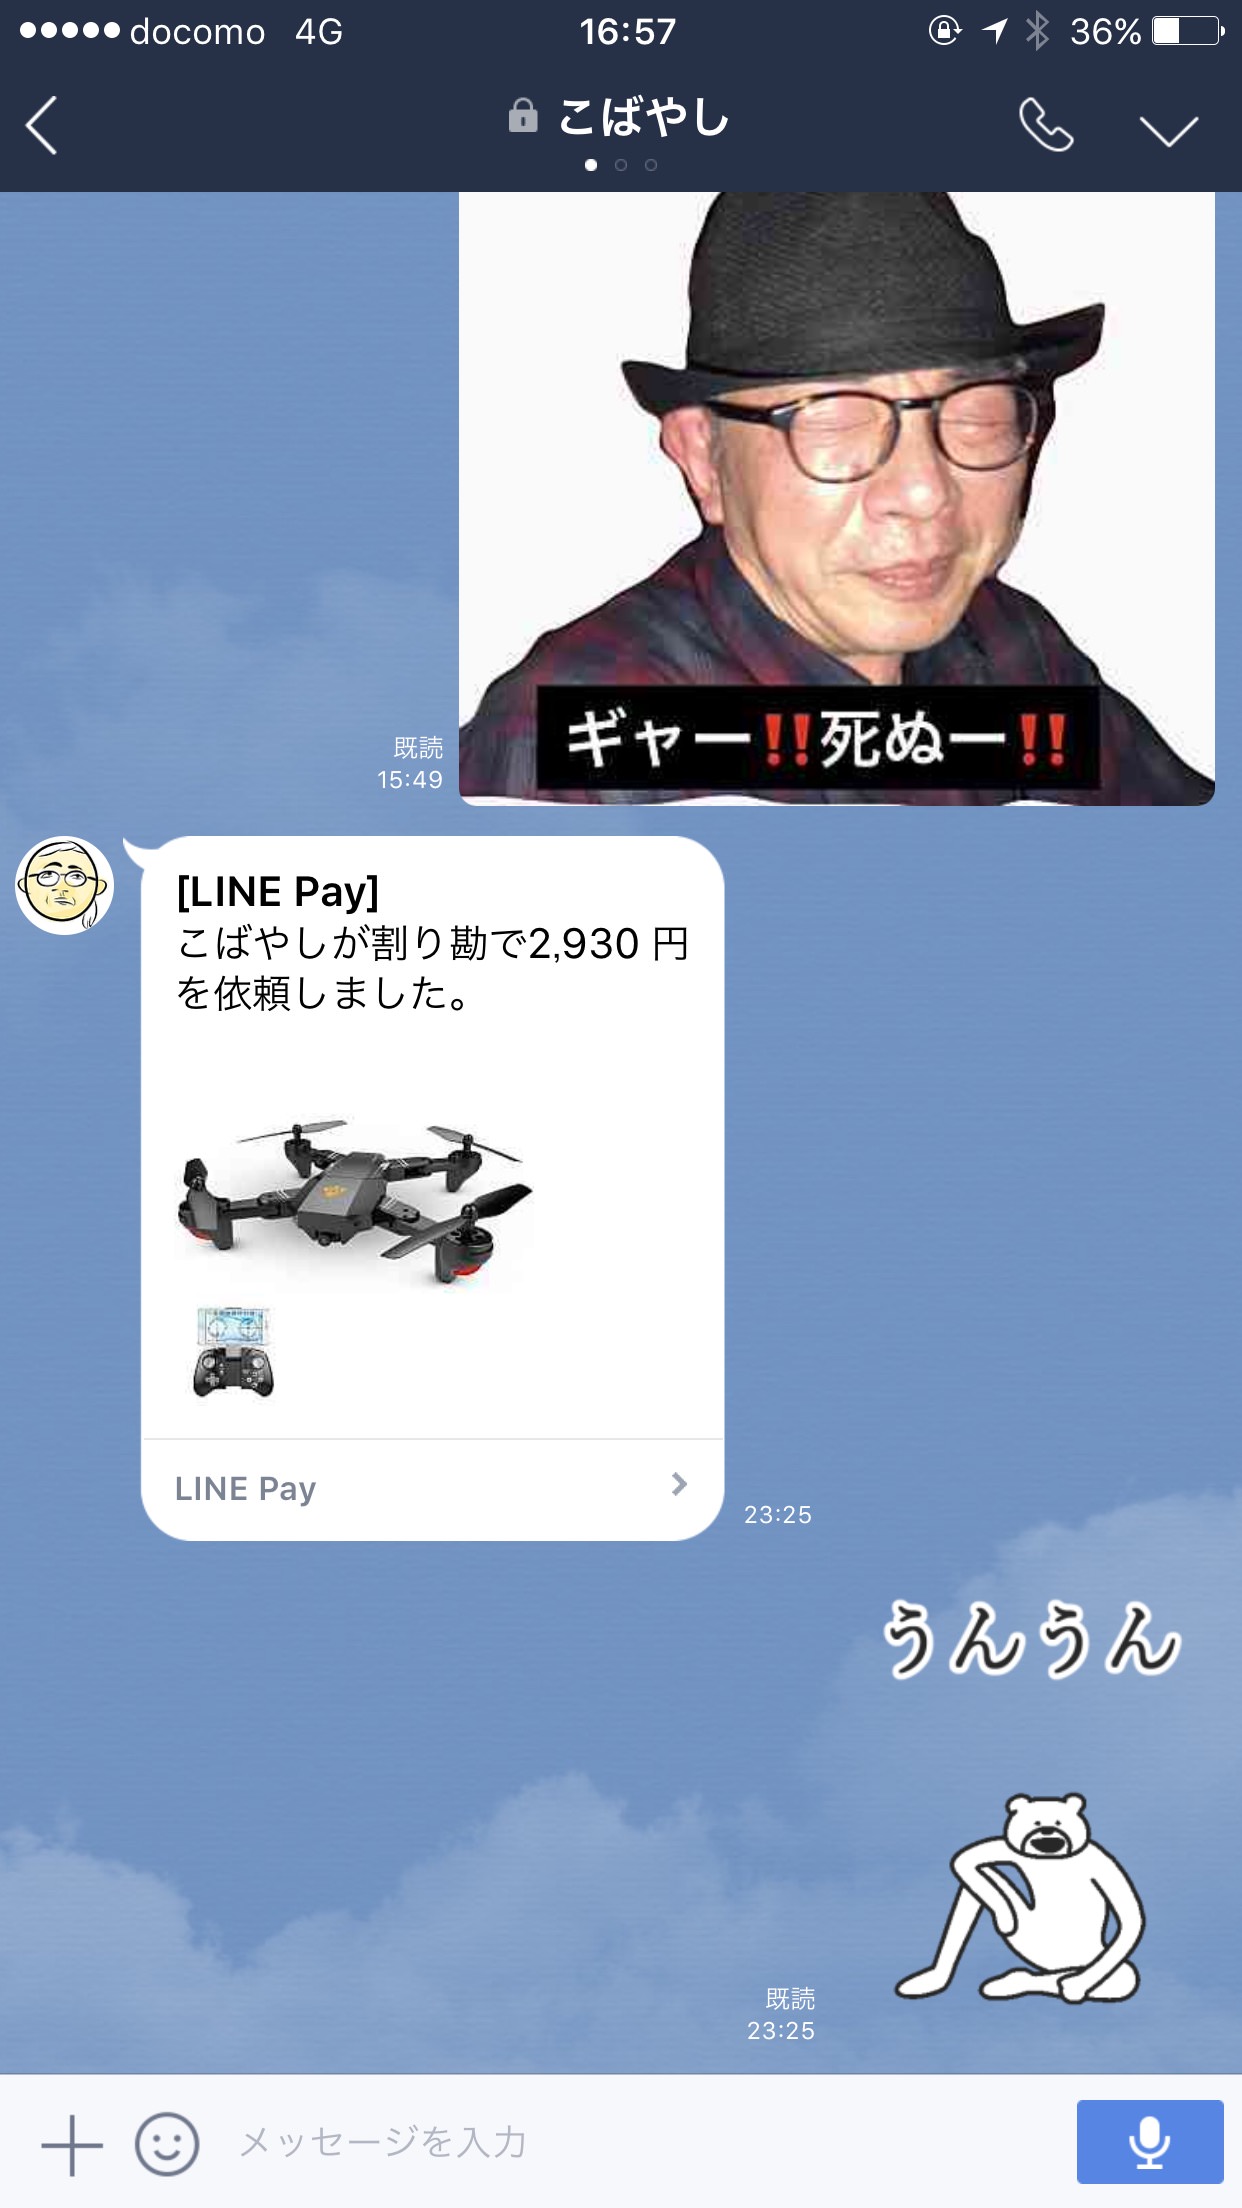 Line pay warikan 6779